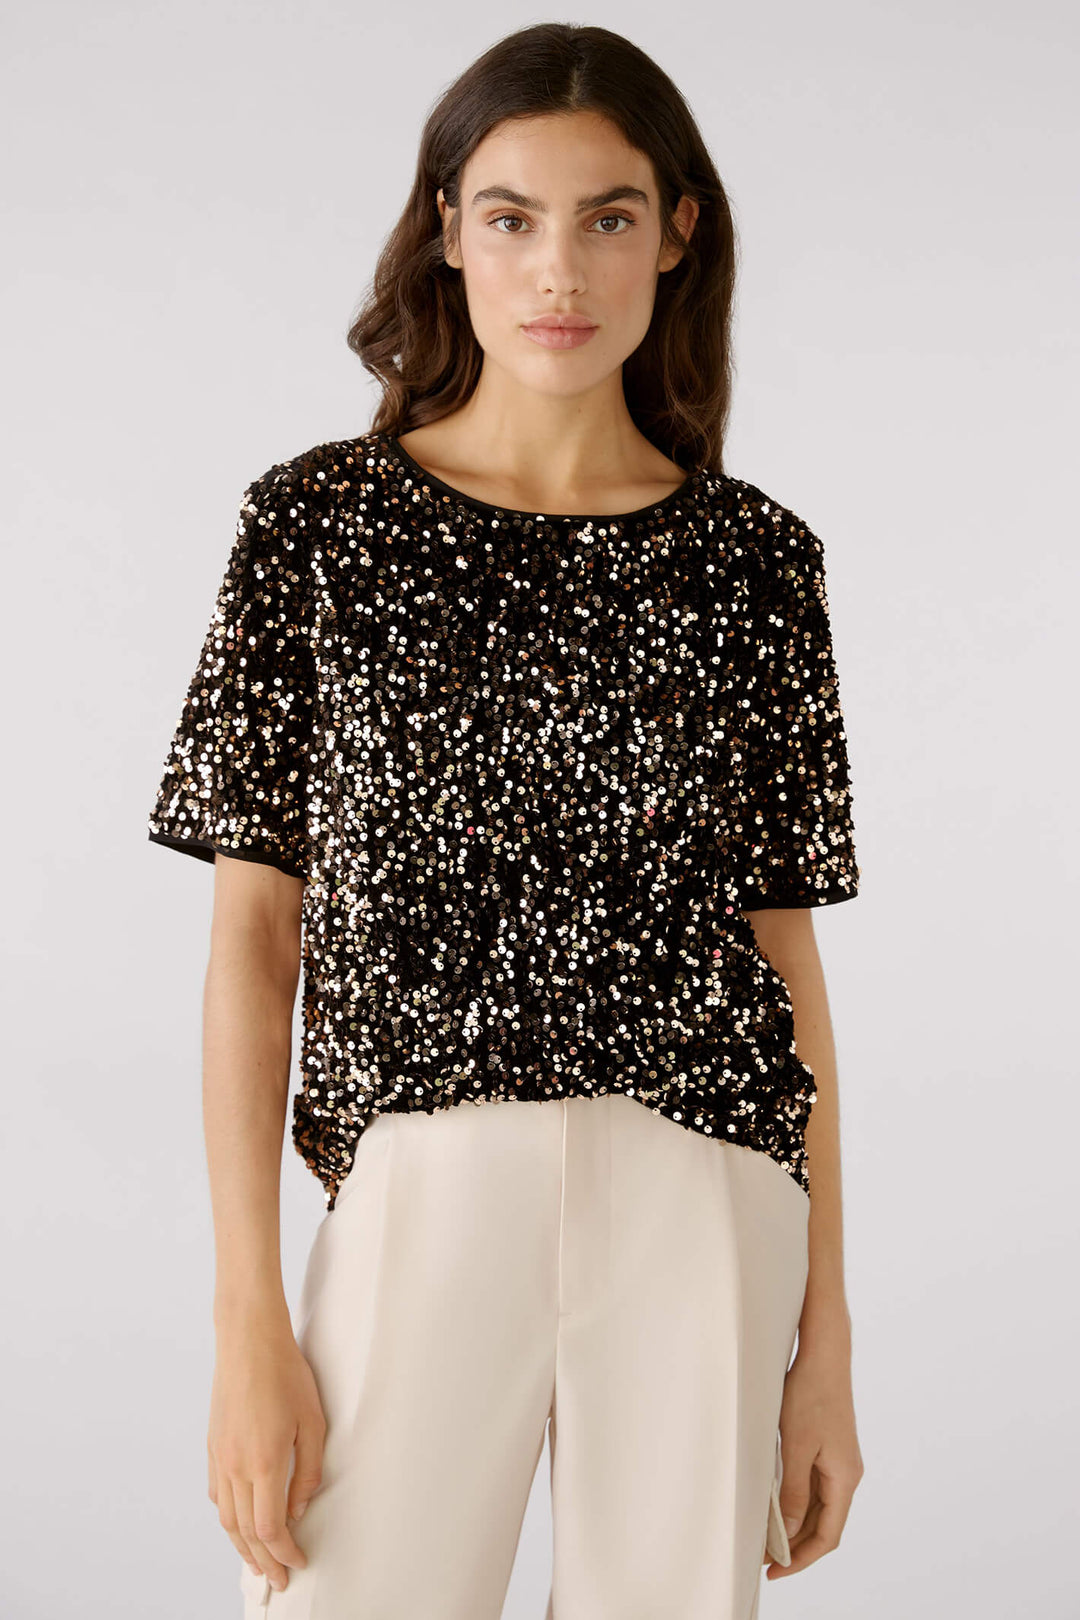 Oui 79491 0769 Black Gold Shirt Sleeve Sequin Top - Shirley Allum